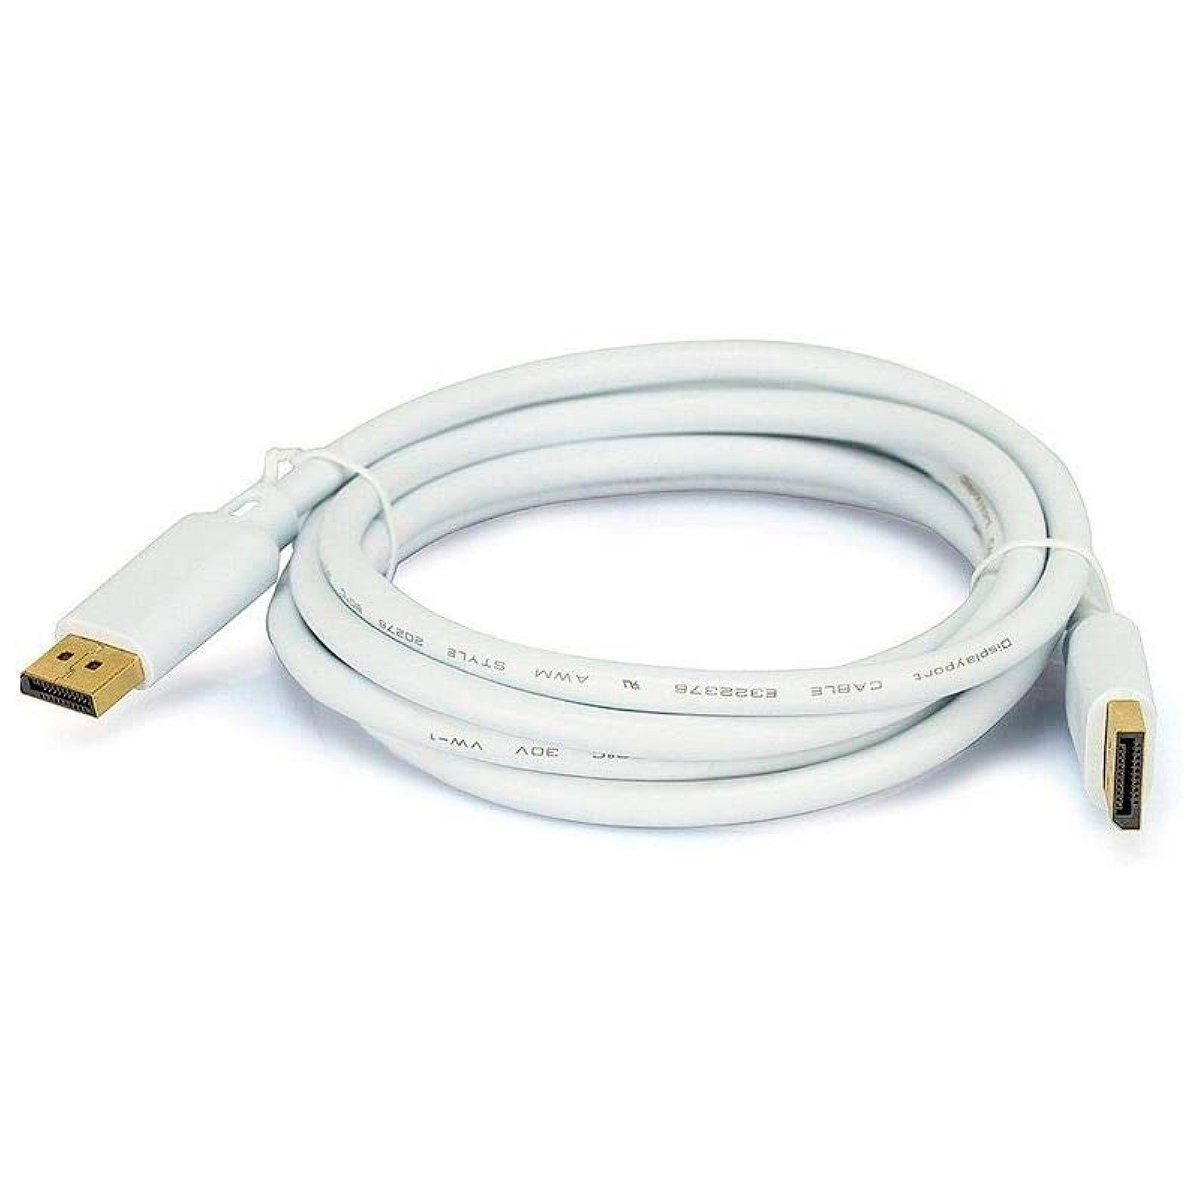 Cabo DisplayPort 1.2 - 5 metros - Branco - Chip SCE 018-7495